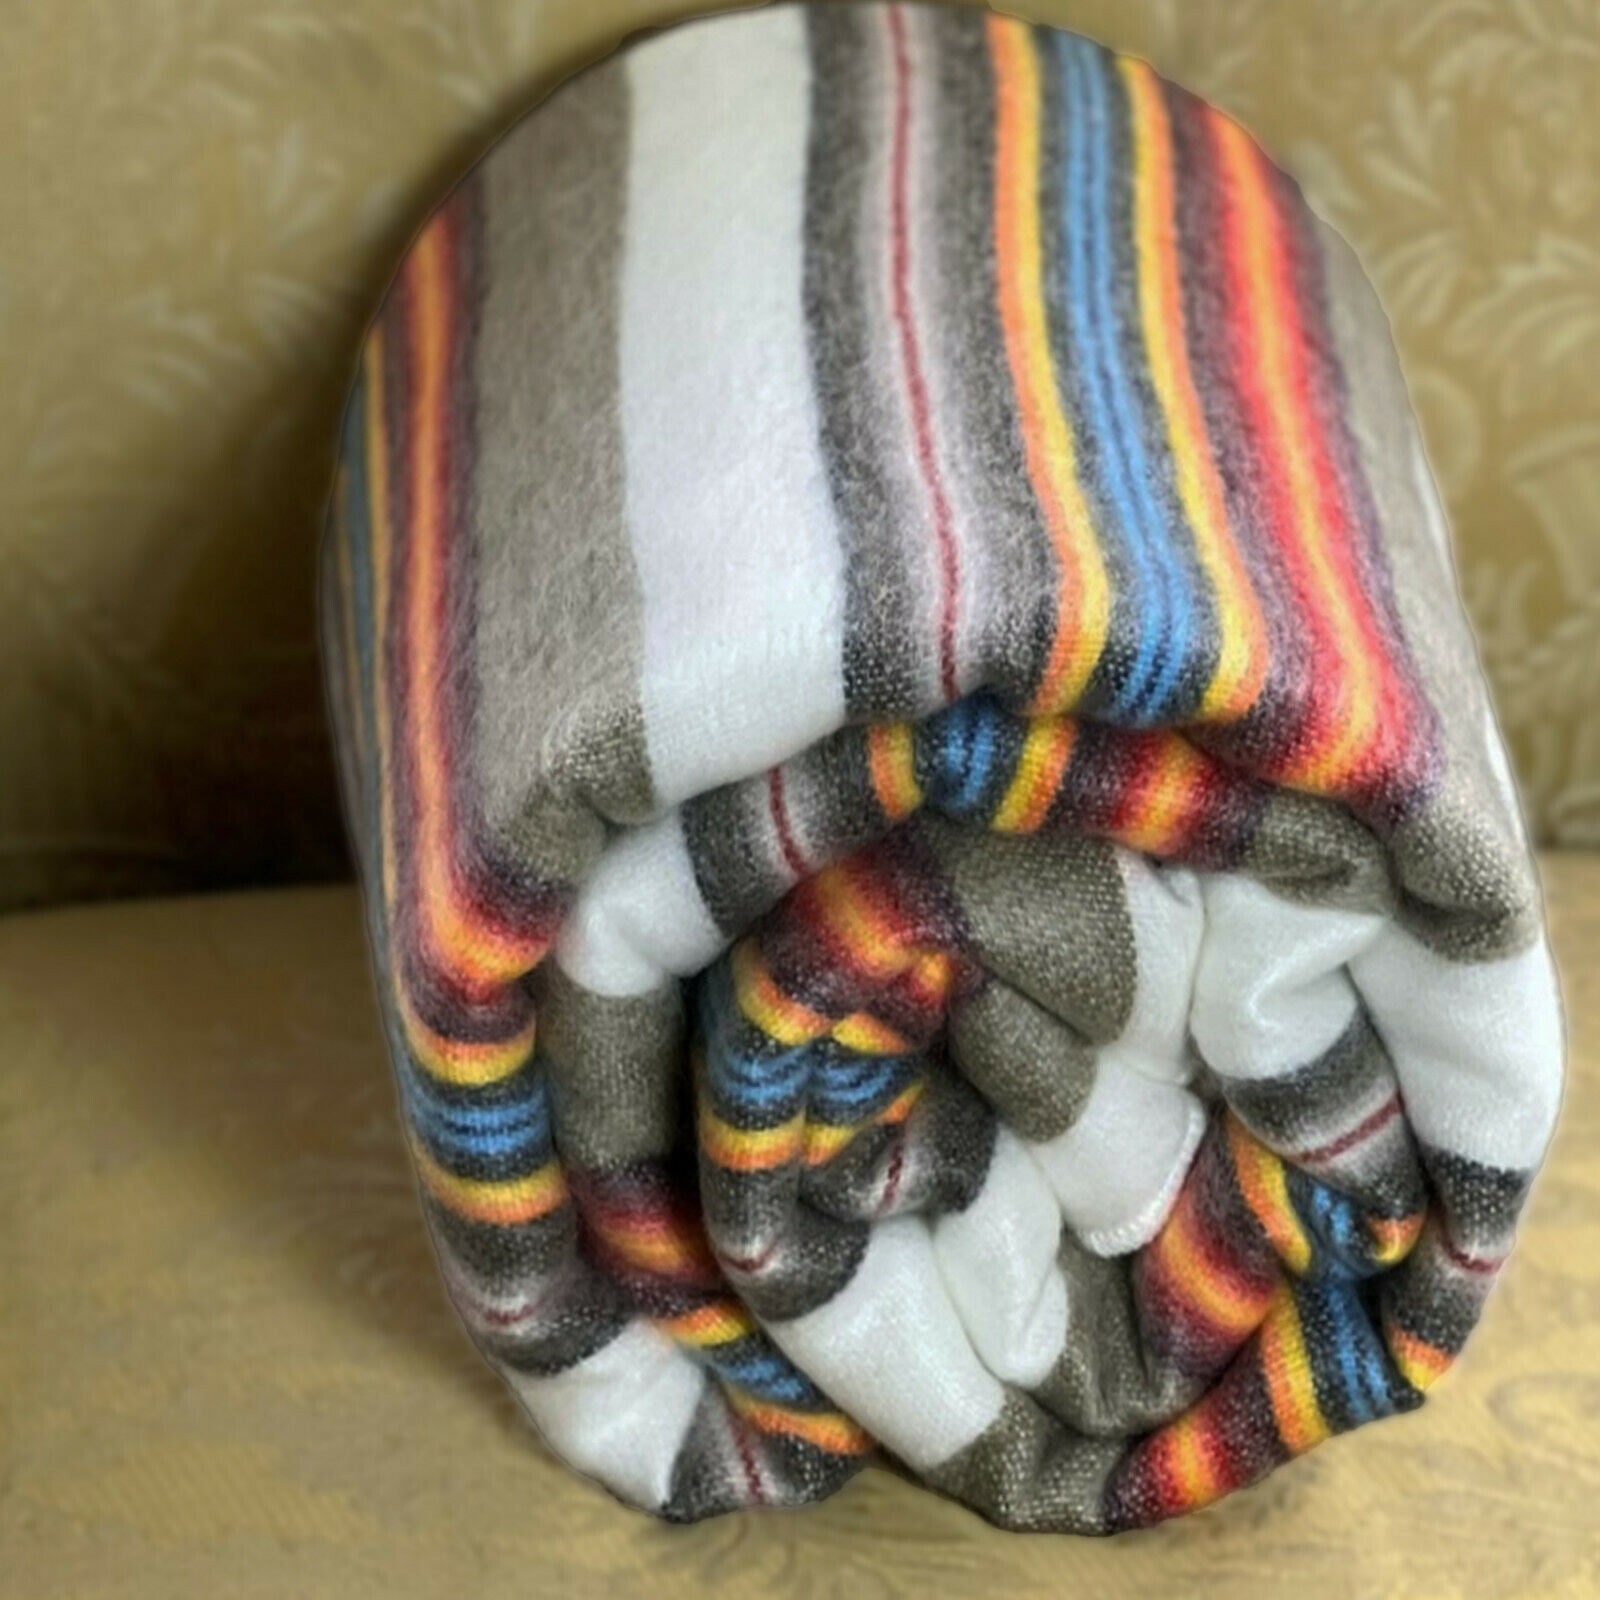 Pita - Baby Alpaca Wool Throw Blanket / Sofa Cover - Queen 97" x 67" - multi coloured thin stripes pattern